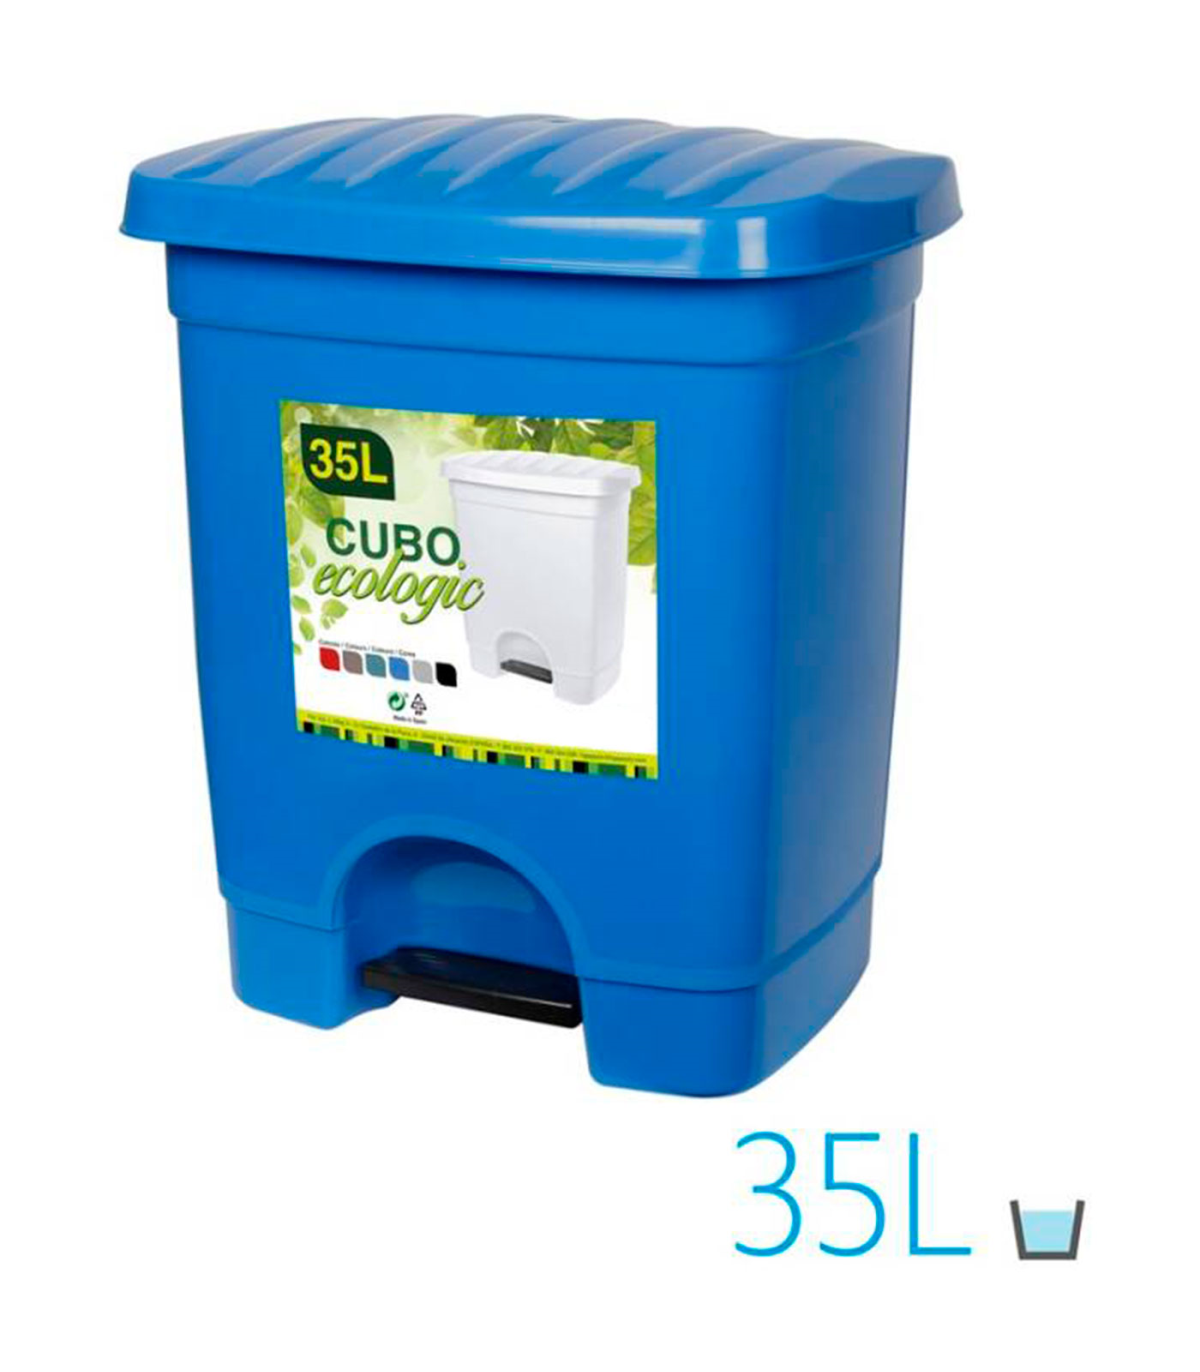 Tradineur - Cubo de basura doble de plástico con tapa, fácil apertura con  pedal, papelera, contenedor almacenamiento de residuos